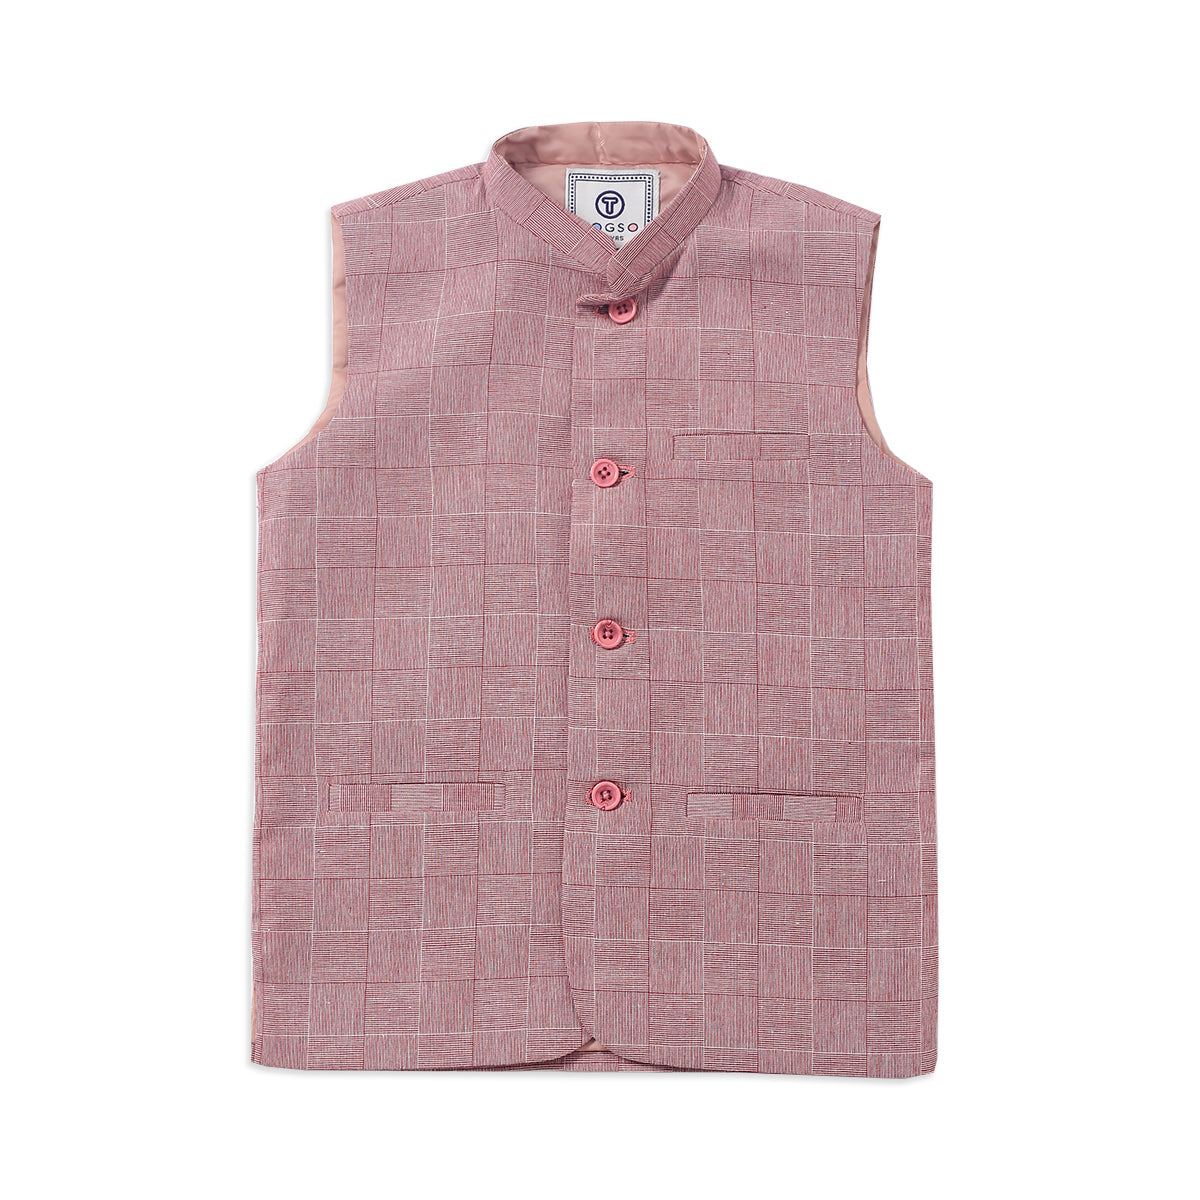 DK Pink Waistcoat